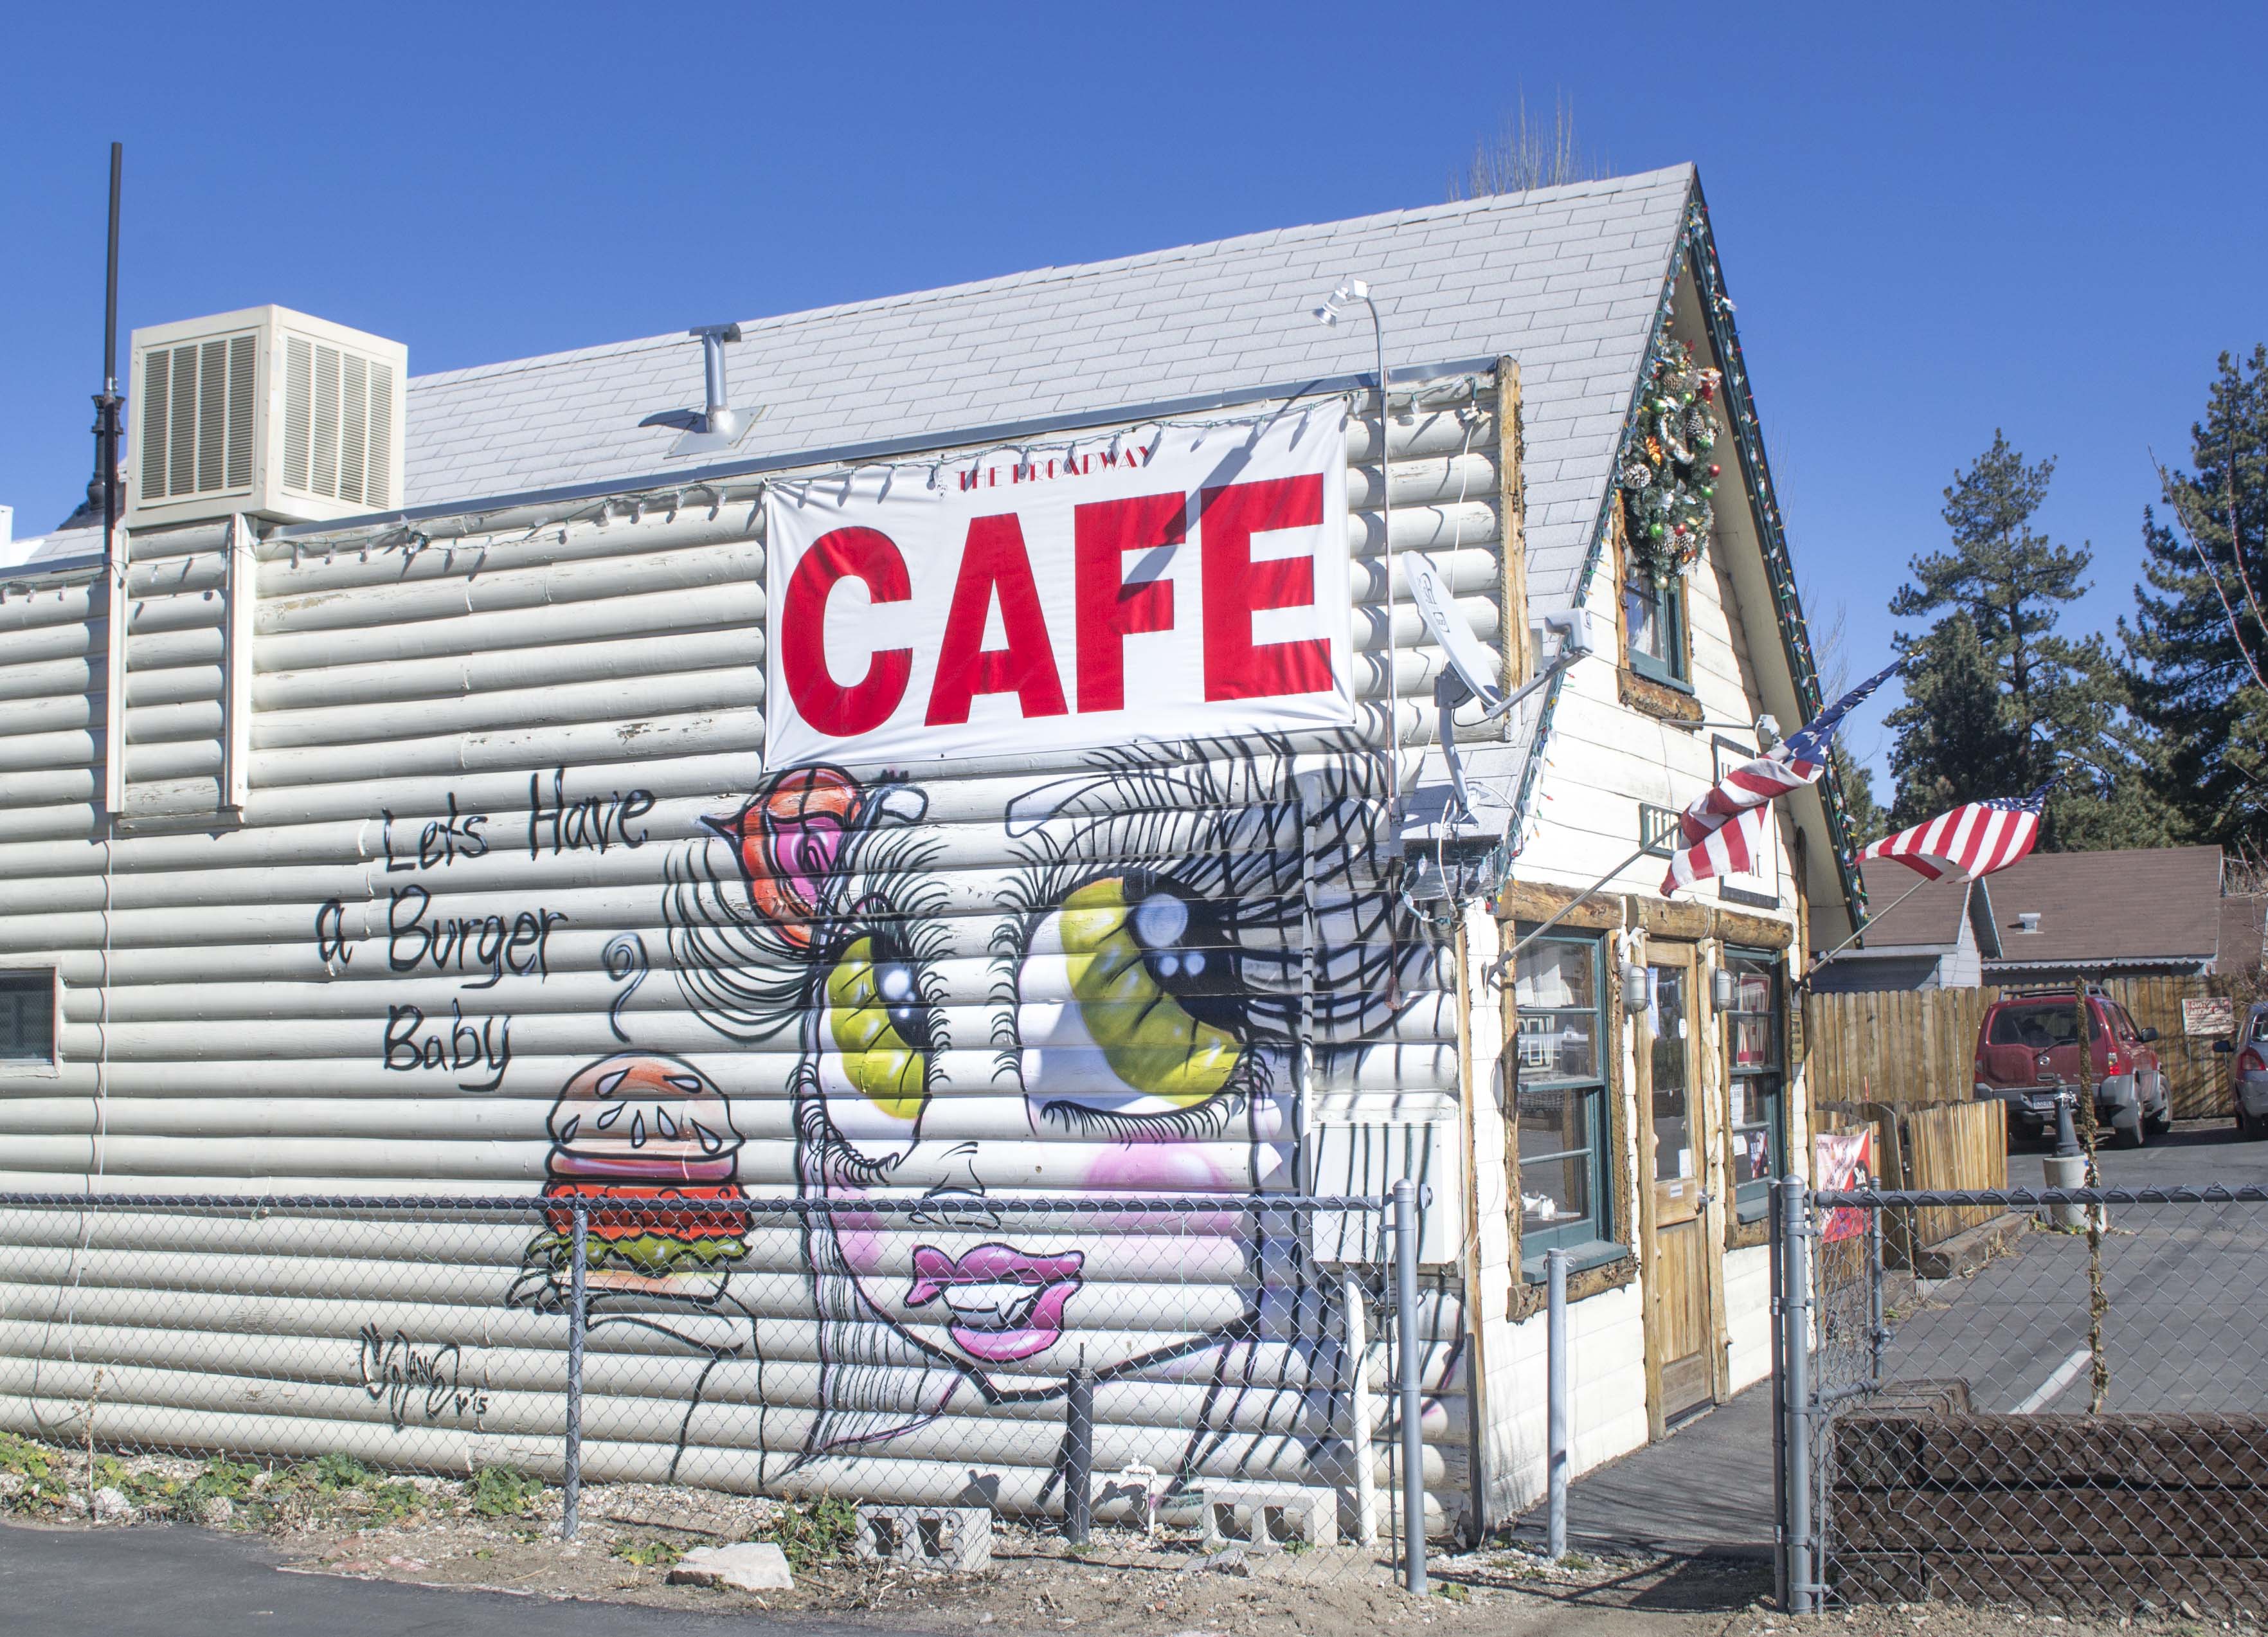 BIG BEAR: A new face in town: LA Street artist leaves mural in Big Bear City